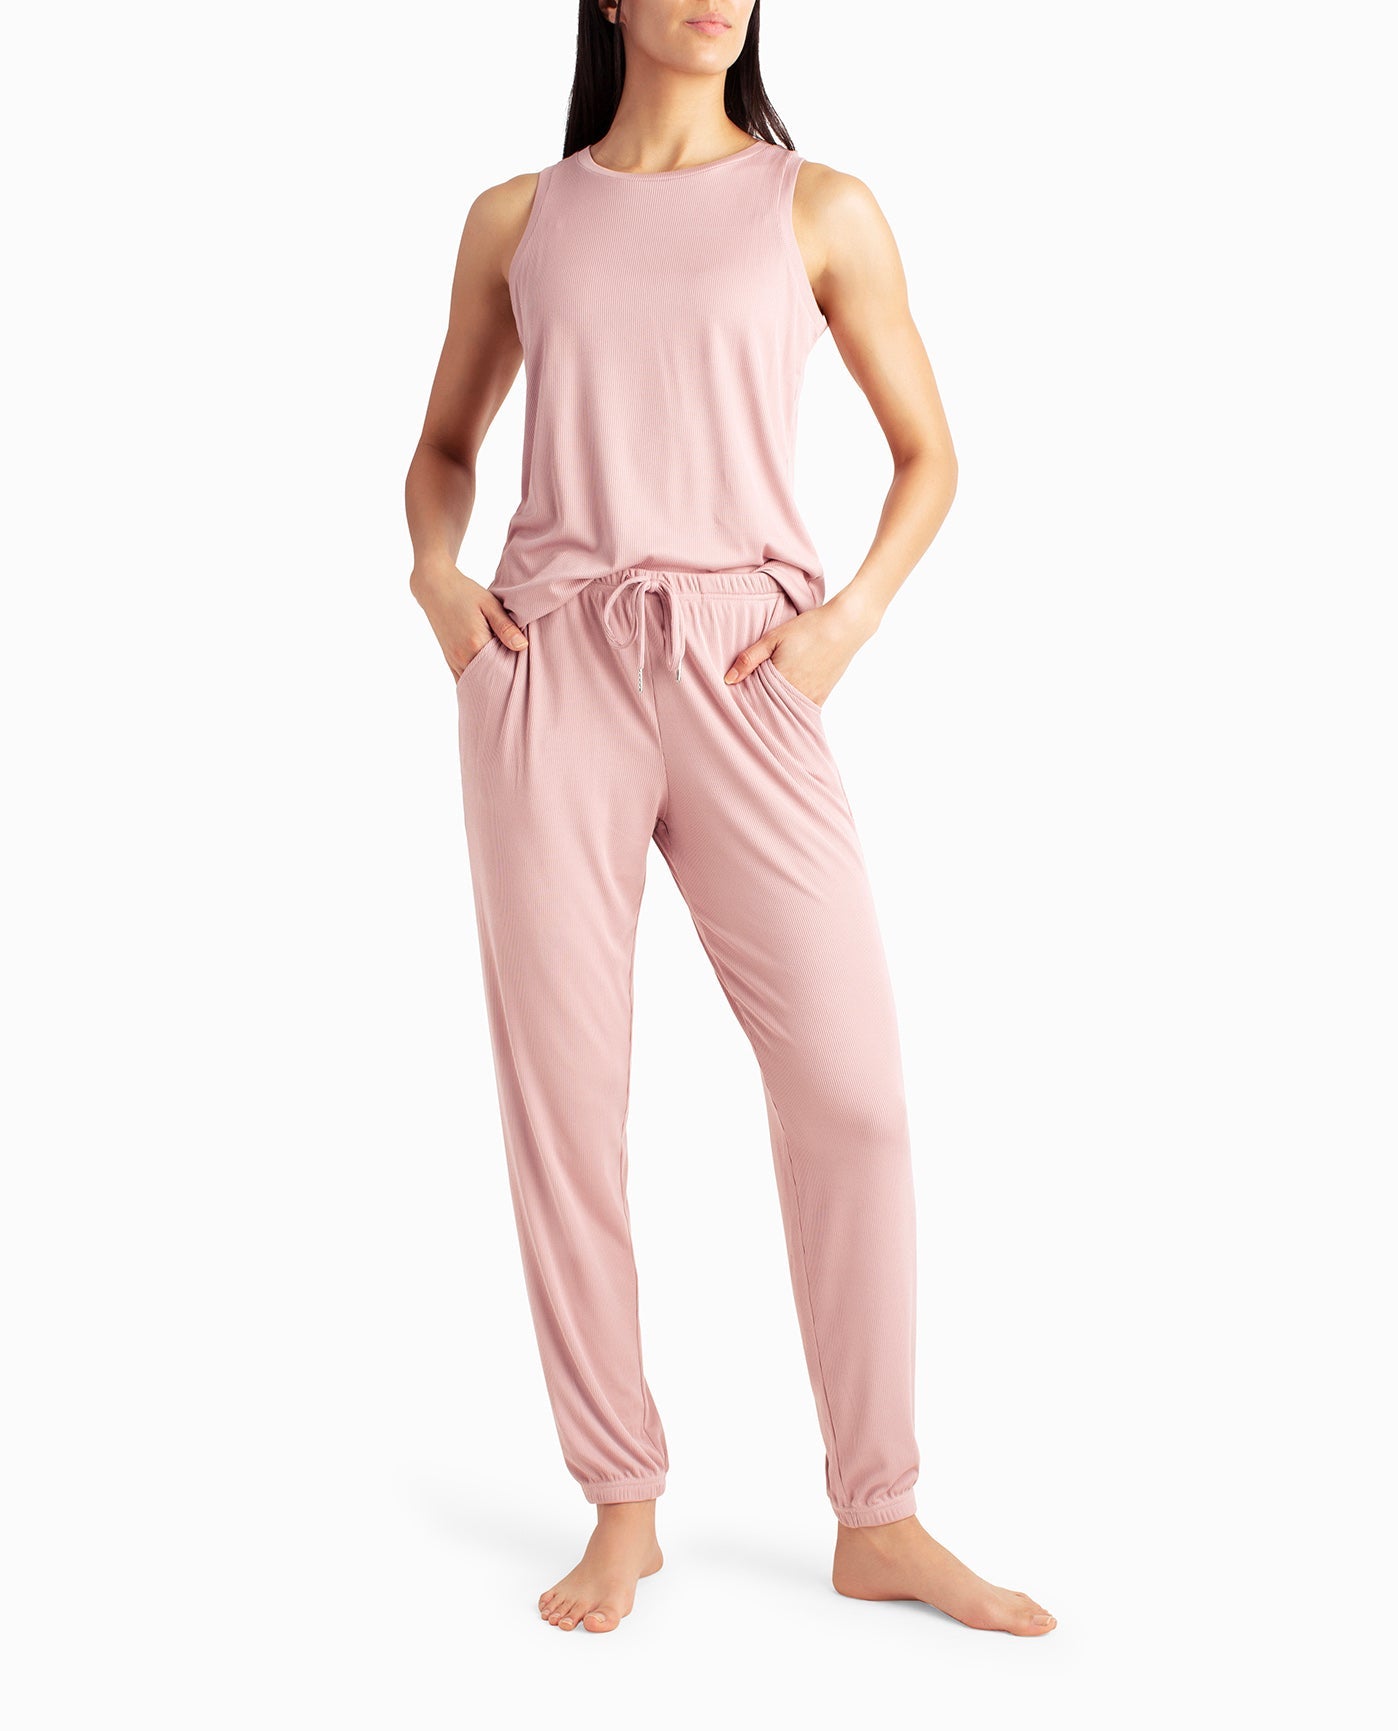 Colsie Women's Plus Size Lounge Pajama Set Sweatpants/Top, Blush